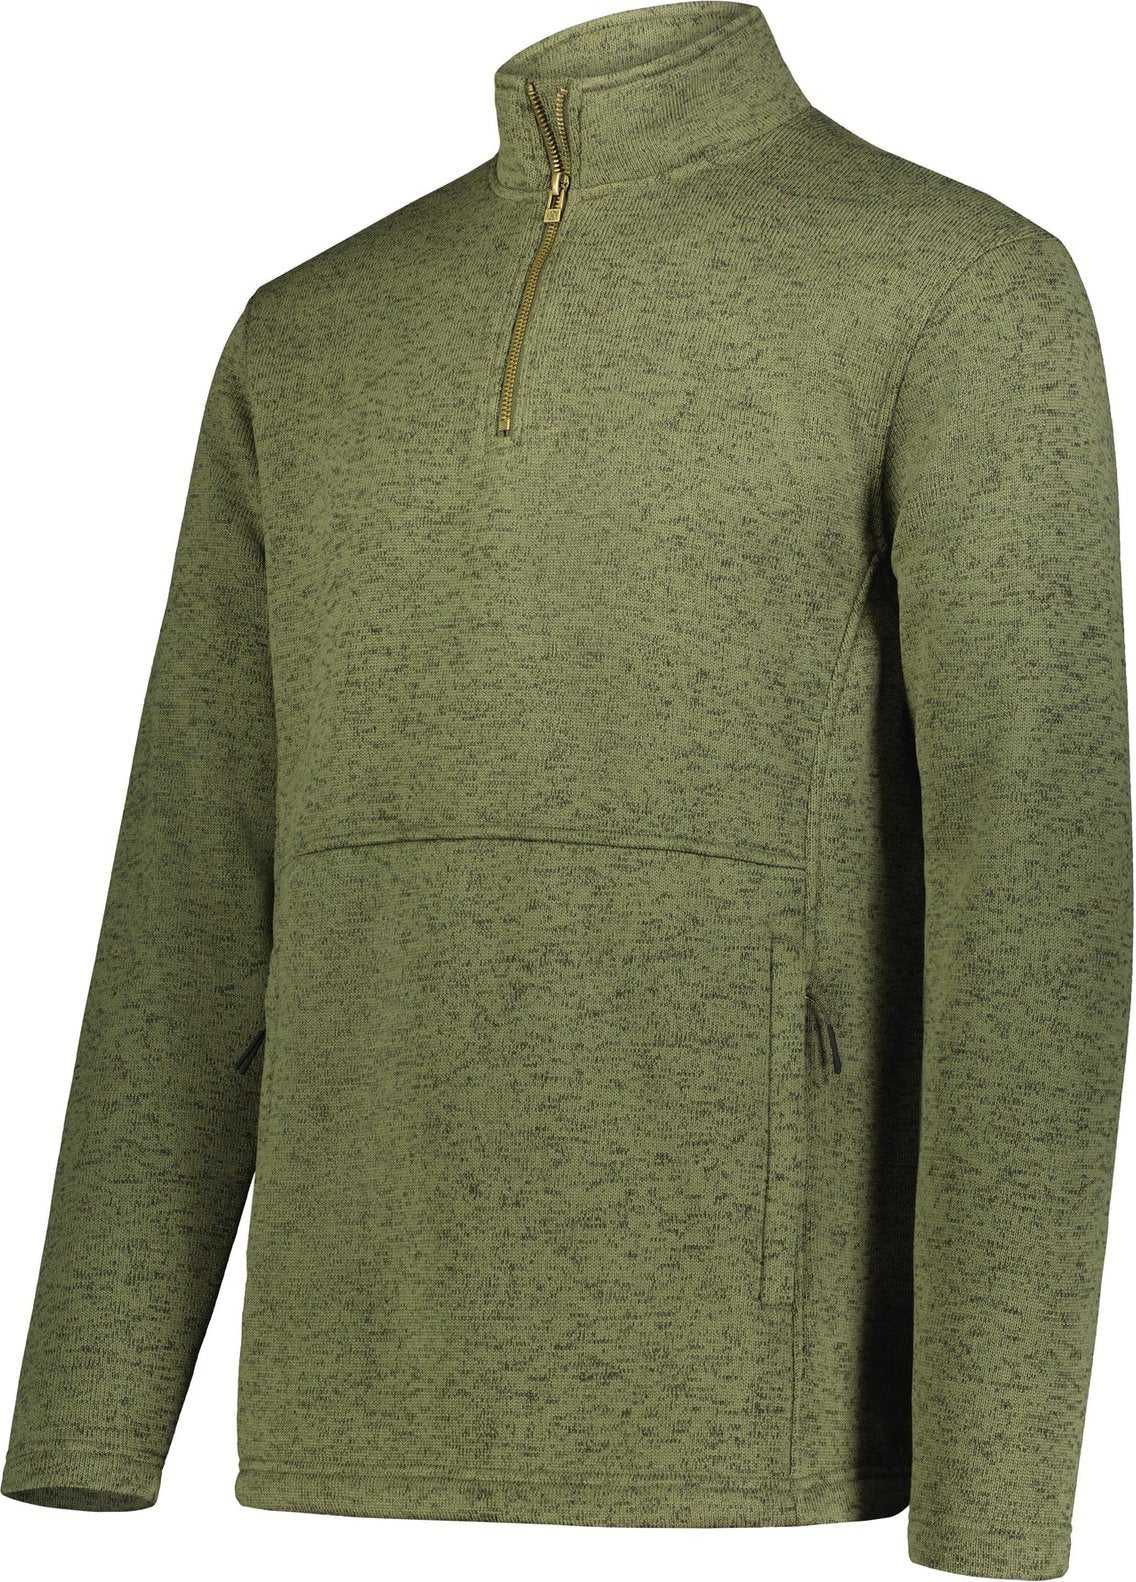 Holloway 223540 Alpine Sweater Fleece 1/4 Zip Pullover - Olive Heather - HIT a Double